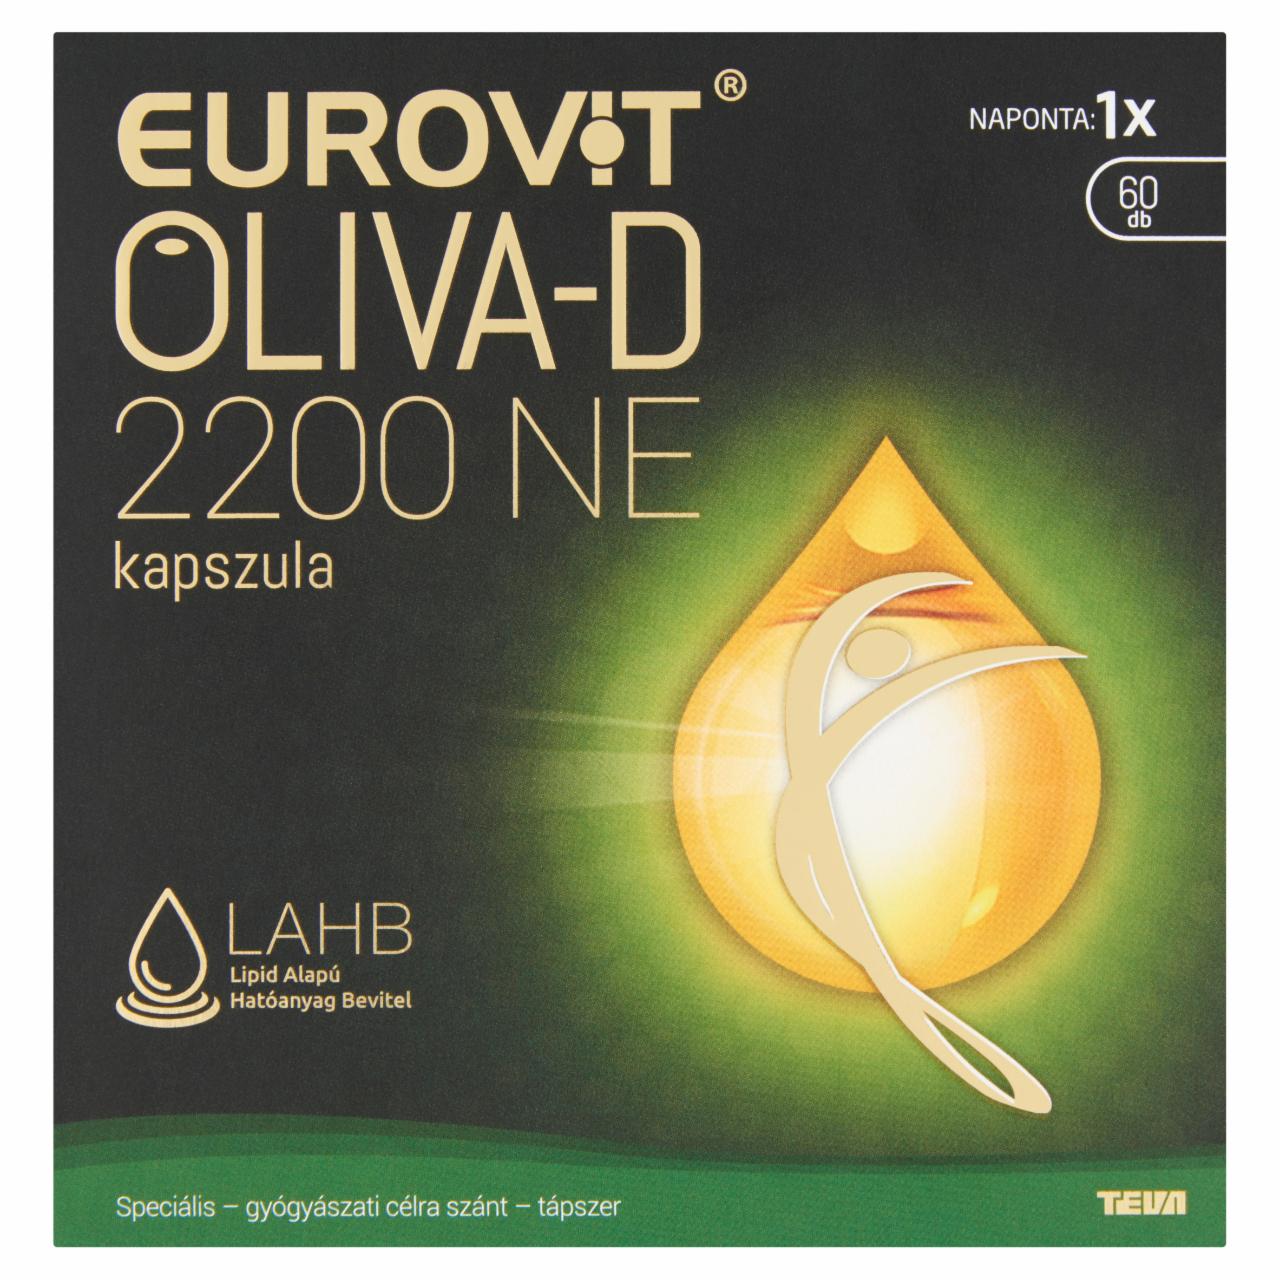 Képek - Eurovit Oliva-D 2200 NE kapszula 60 db